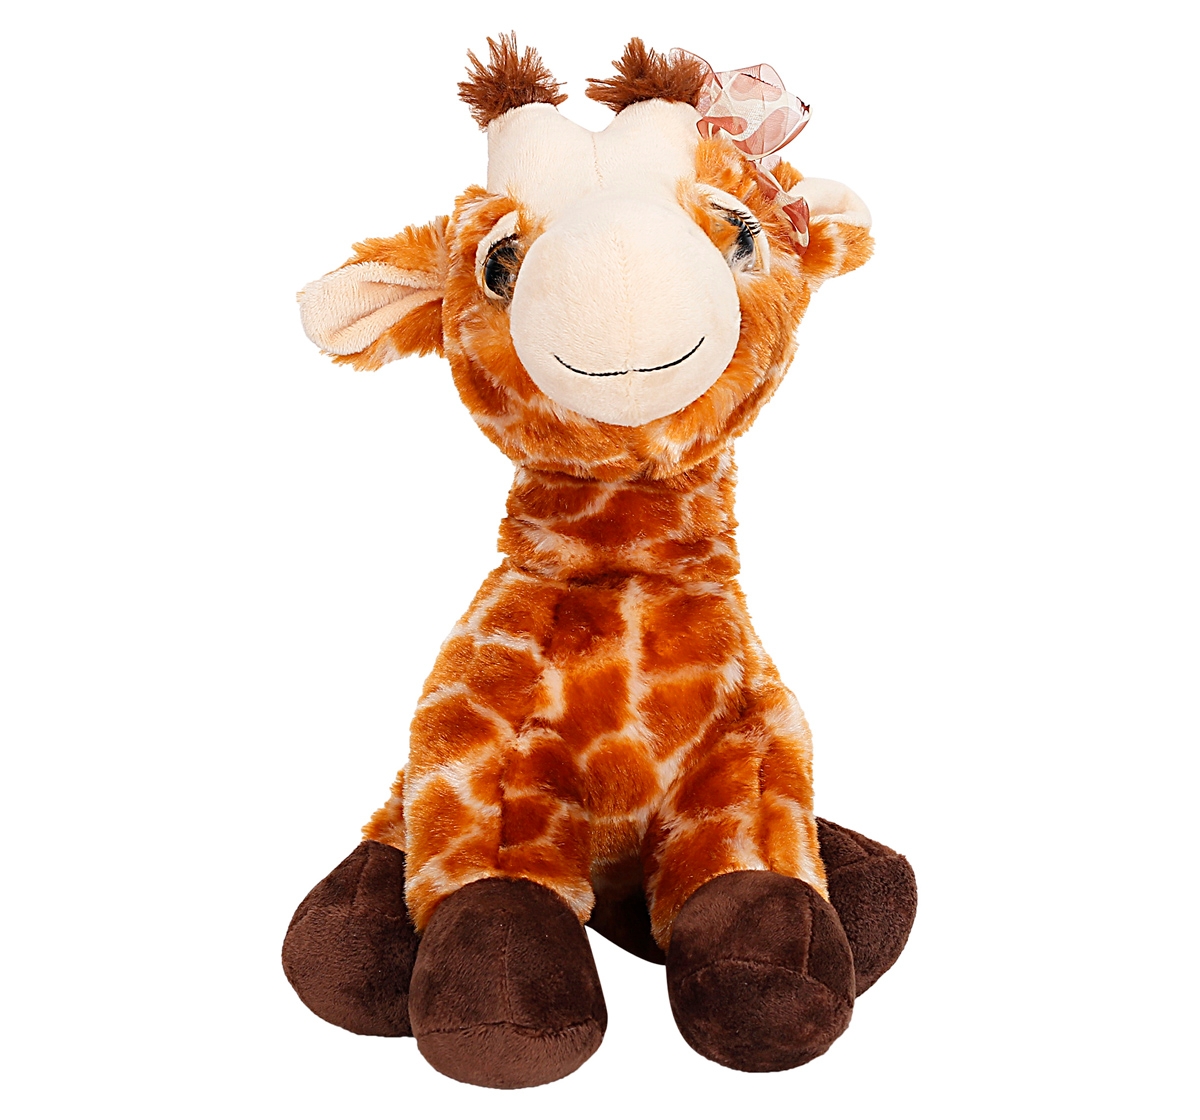 Fuzzbuzz 12cm Lash Giraffe Soft Toy for Kids 3Y+, Multicolour